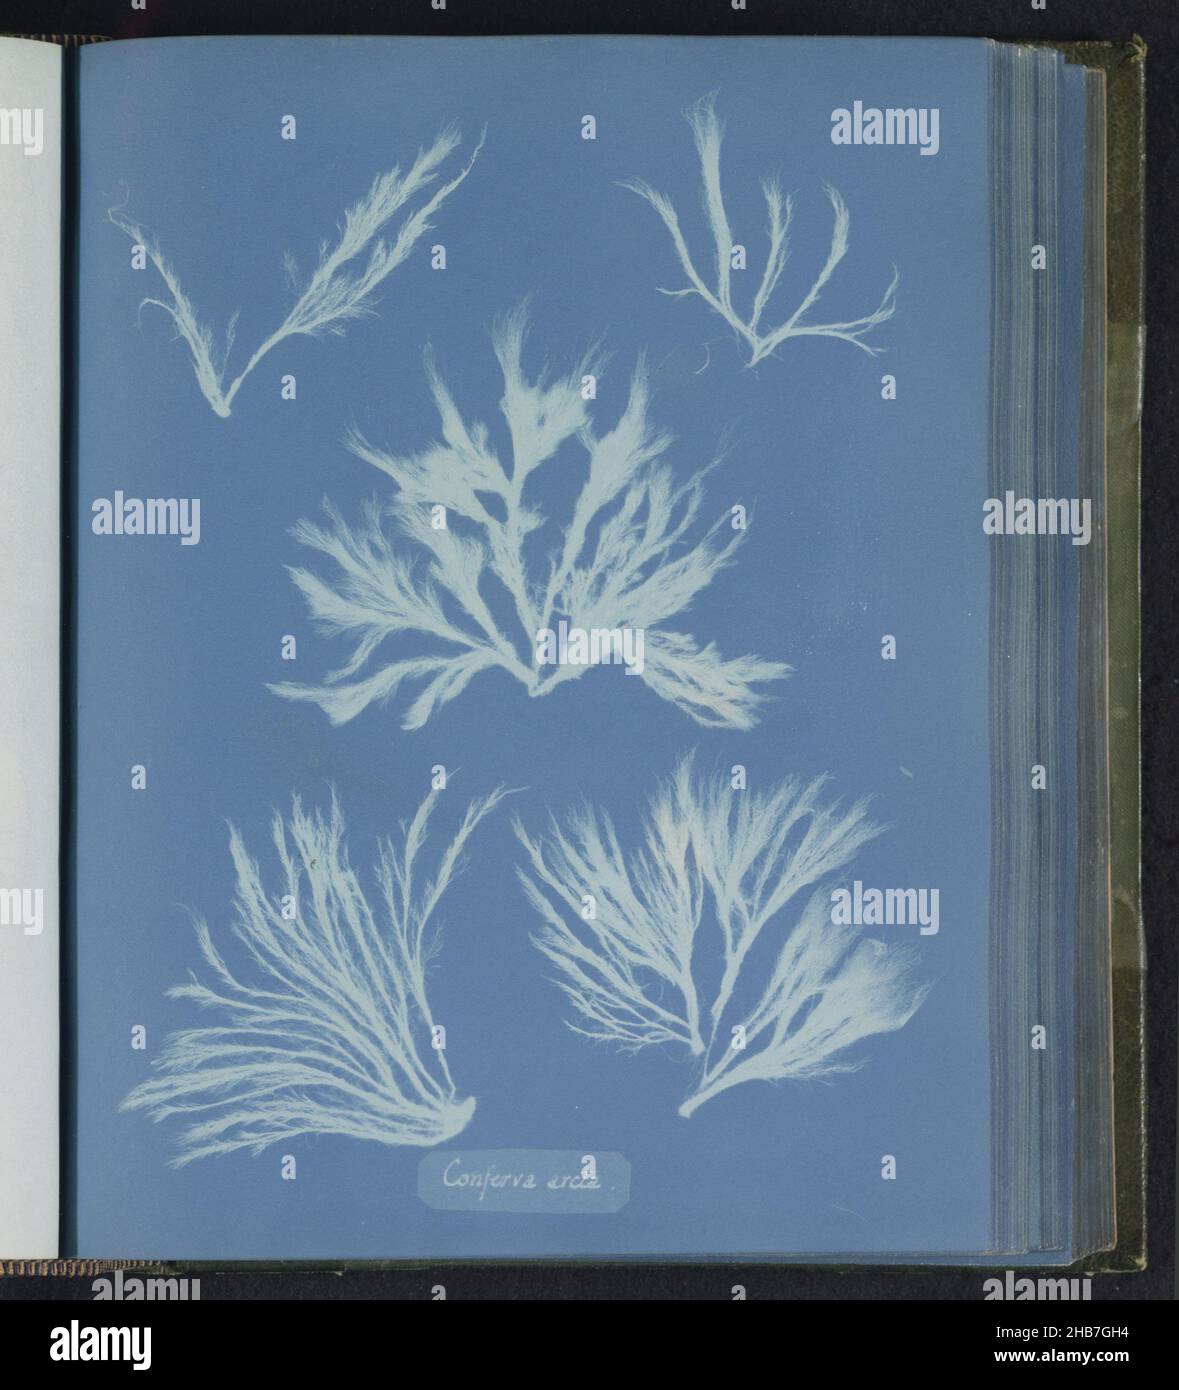 Conferva arcta, Anna Atkins, United Kingdom, c. 1843 - c. 1853, photographic support, cyanotype, height 250 mm × width 200 mm Stock Photo